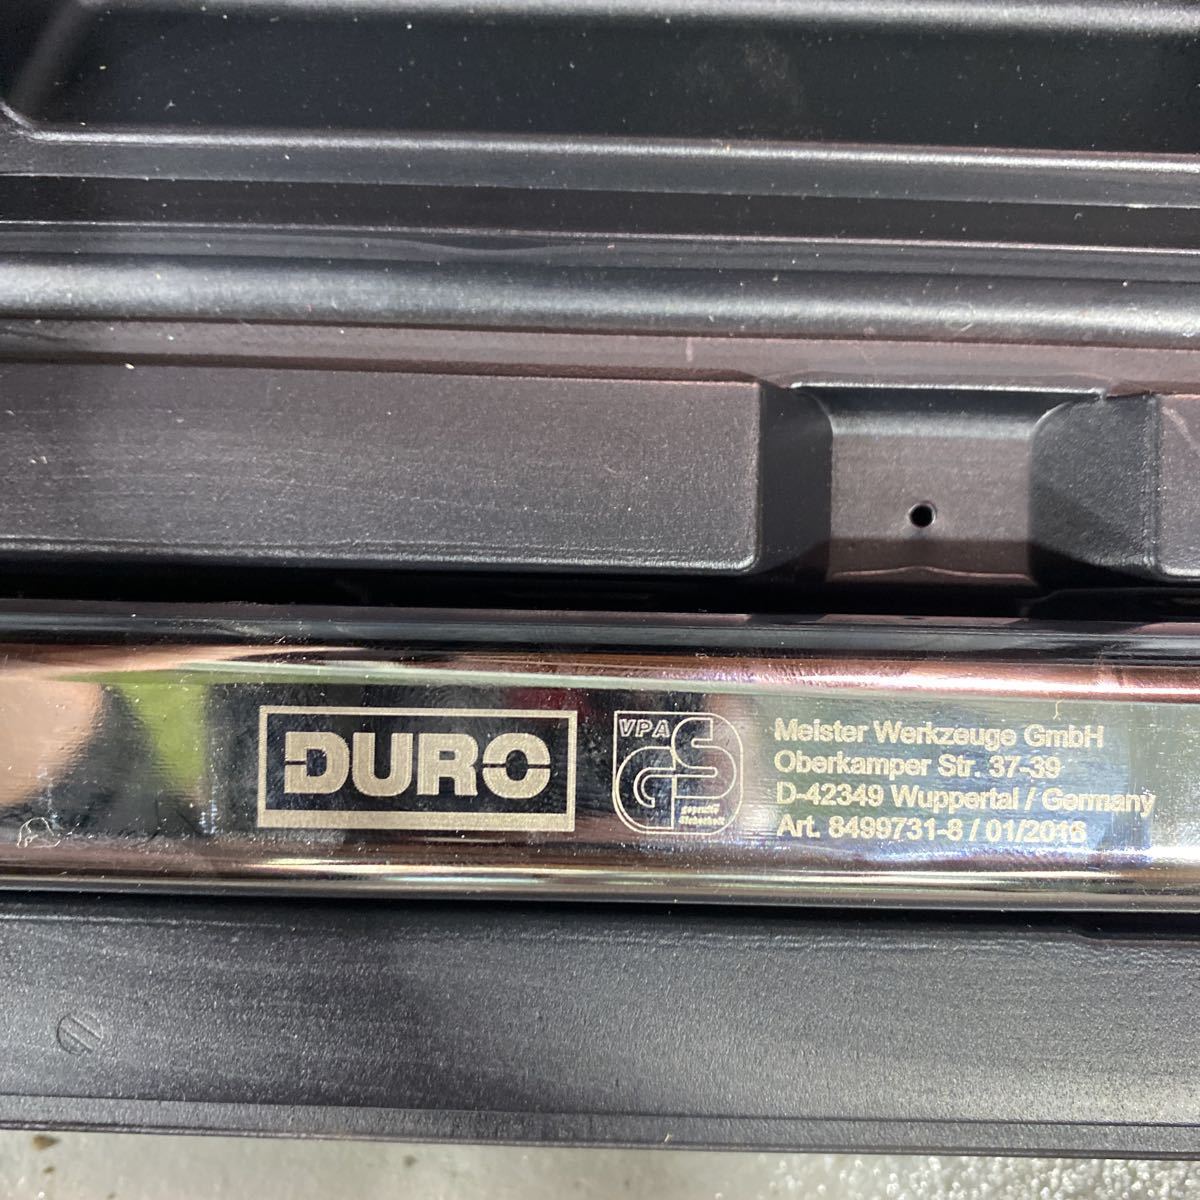 DUROa -stroke Pro daktsu? torque wrench 1/2